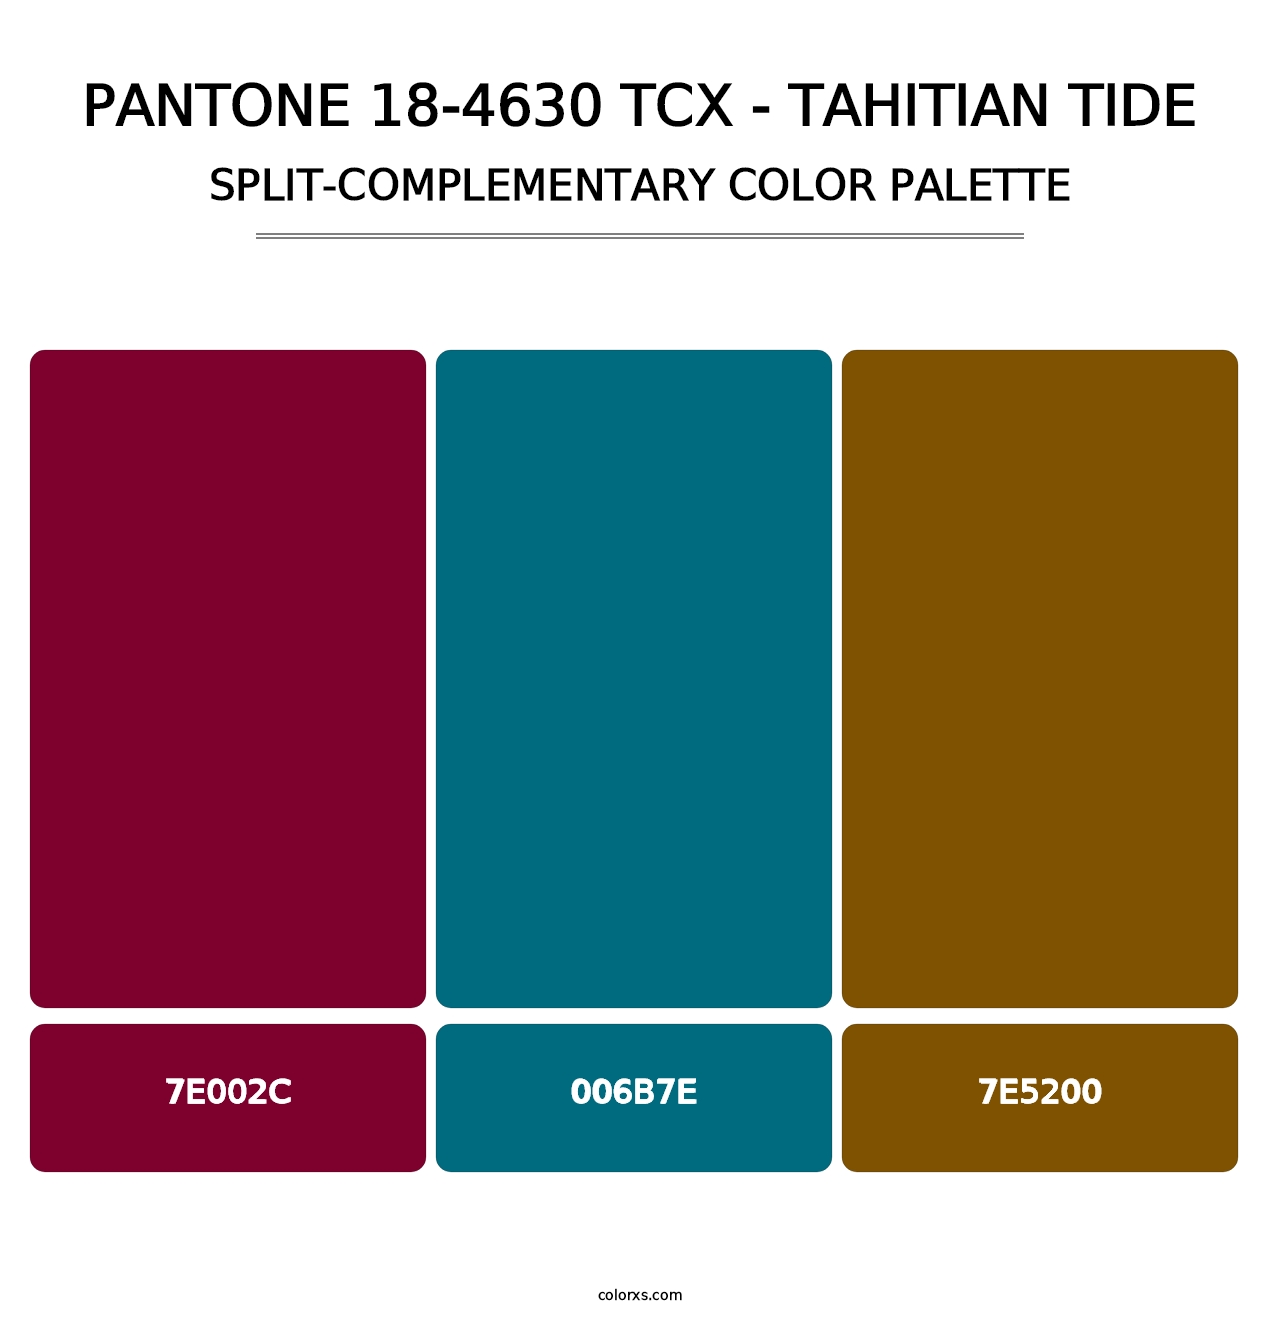 PANTONE 18-4630 TCX - Tahitian Tide - Split-Complementary Color Palette